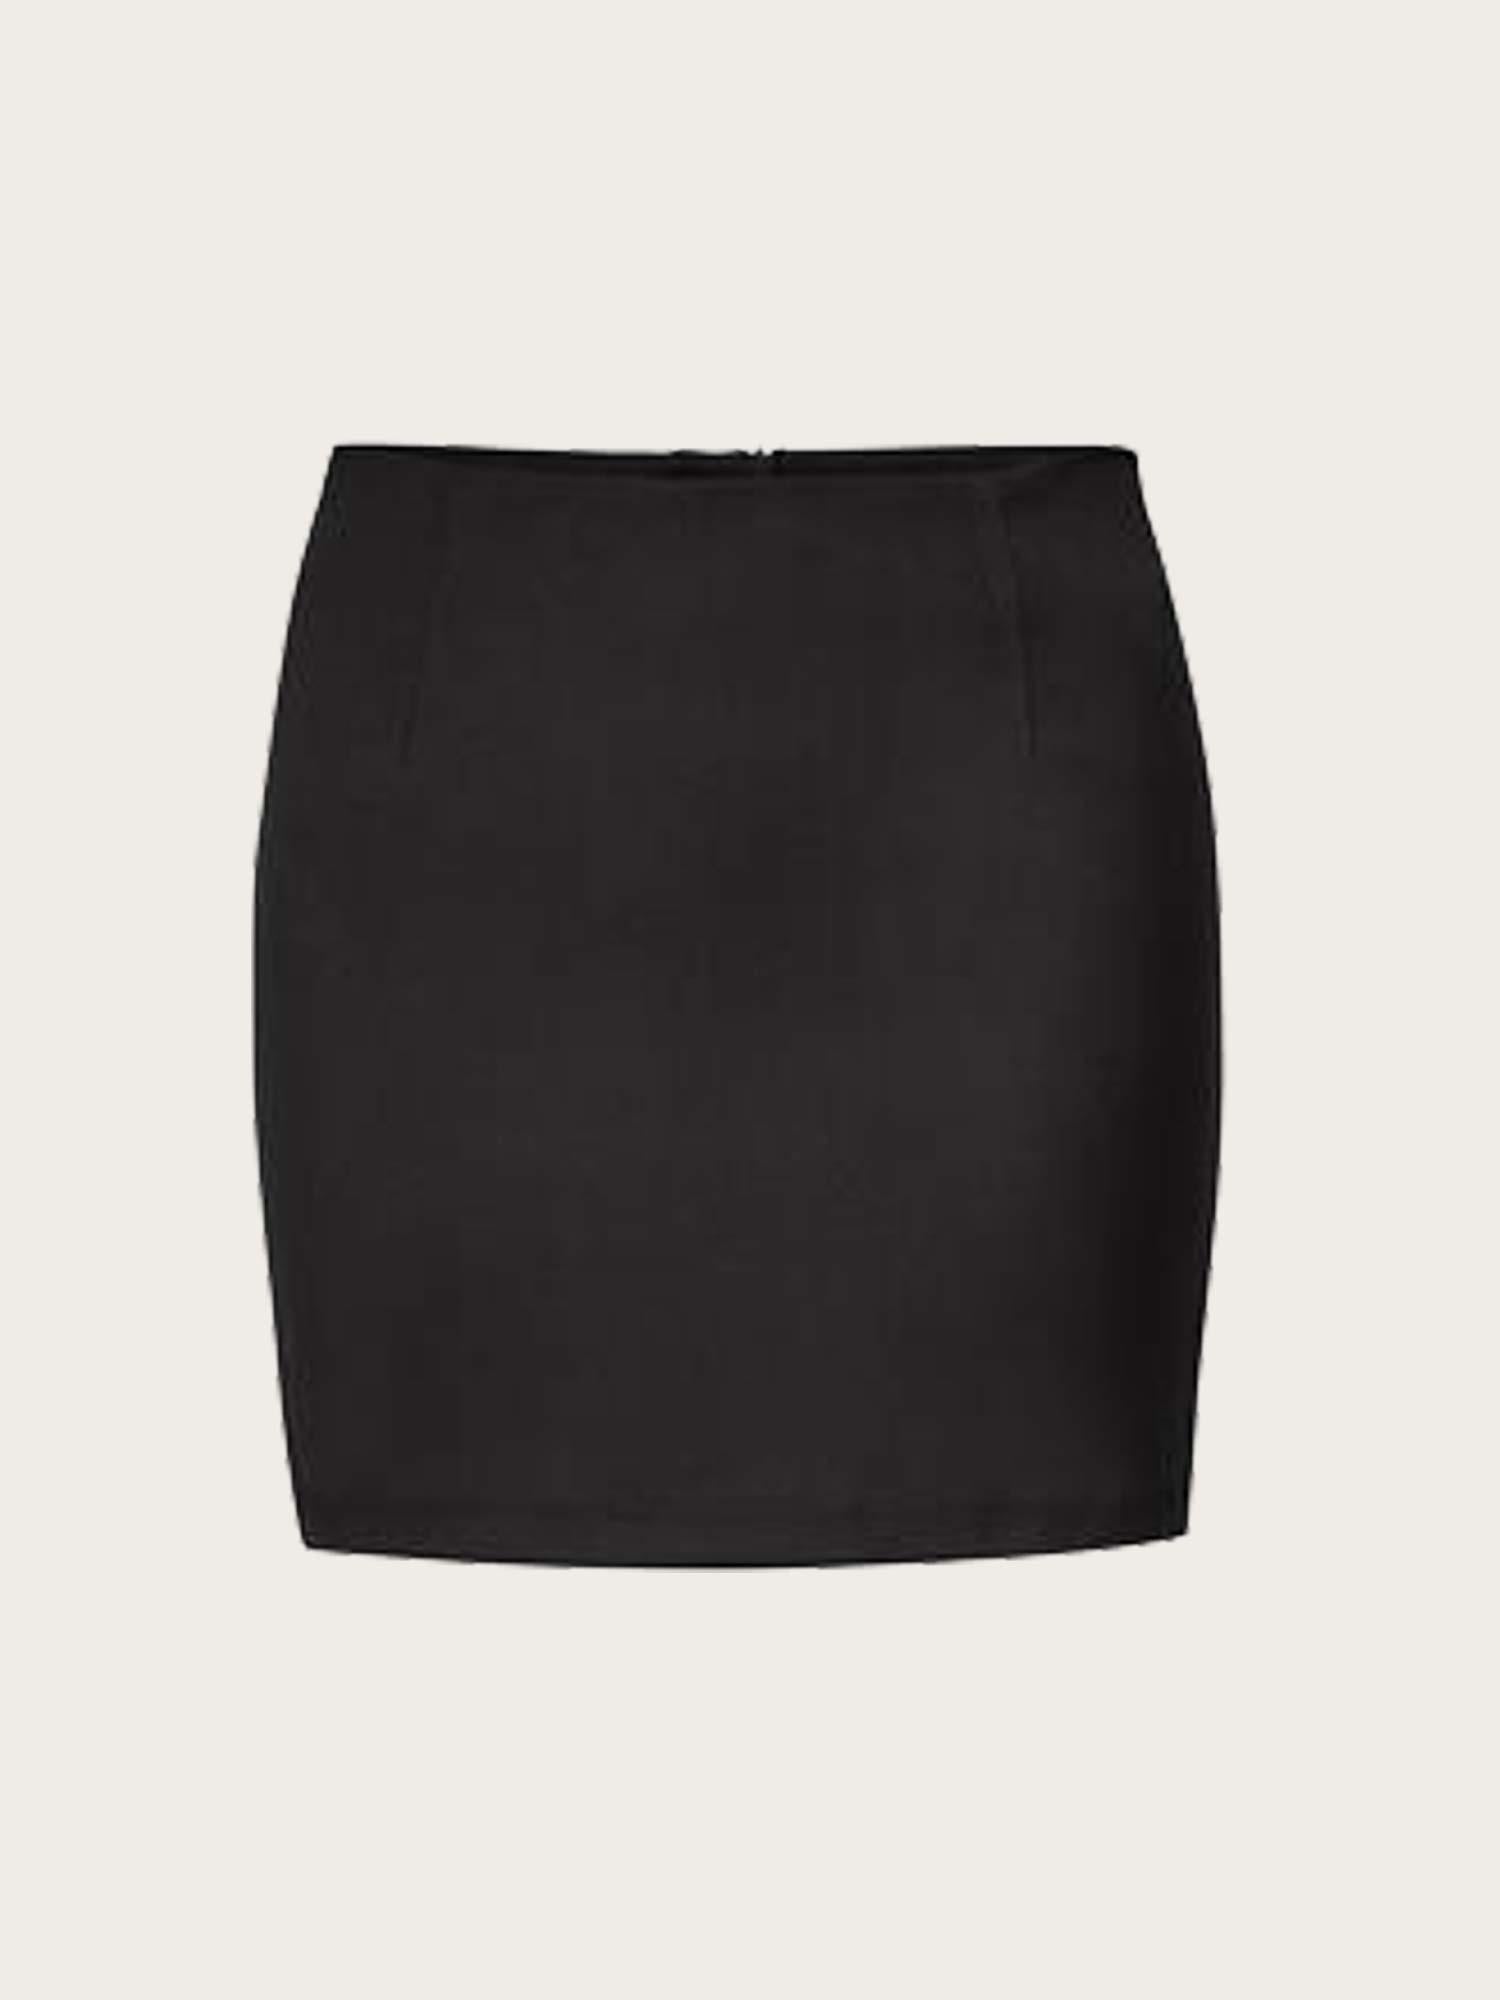 Paula MW Mini Skirt - Black